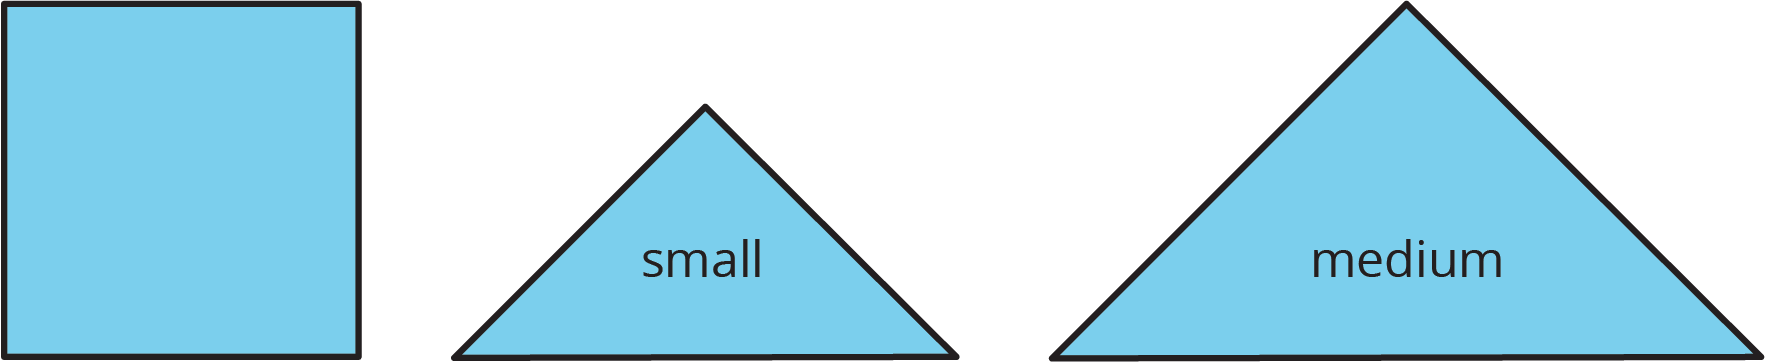 Three figures. A square, a small triangle, and a medium triangle.